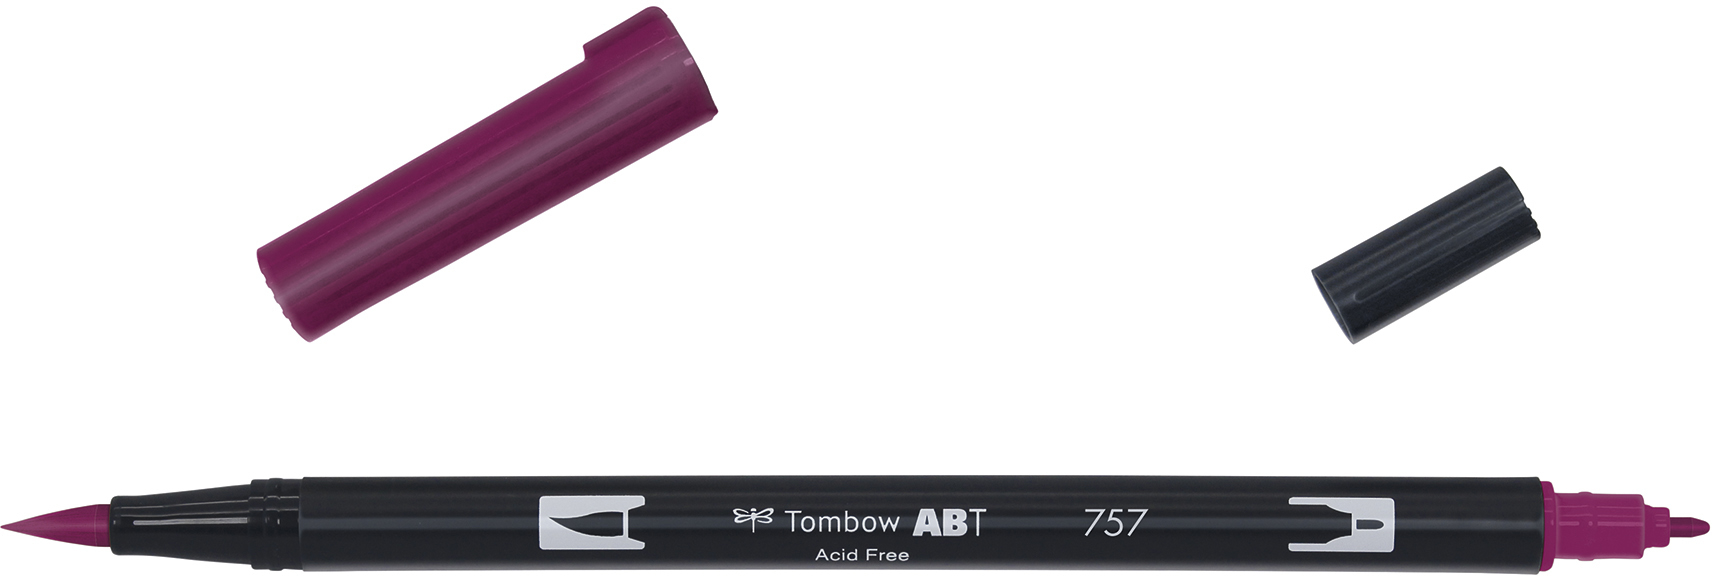 TOMBOW Dual Brush Pen ABT 757 bordeaux